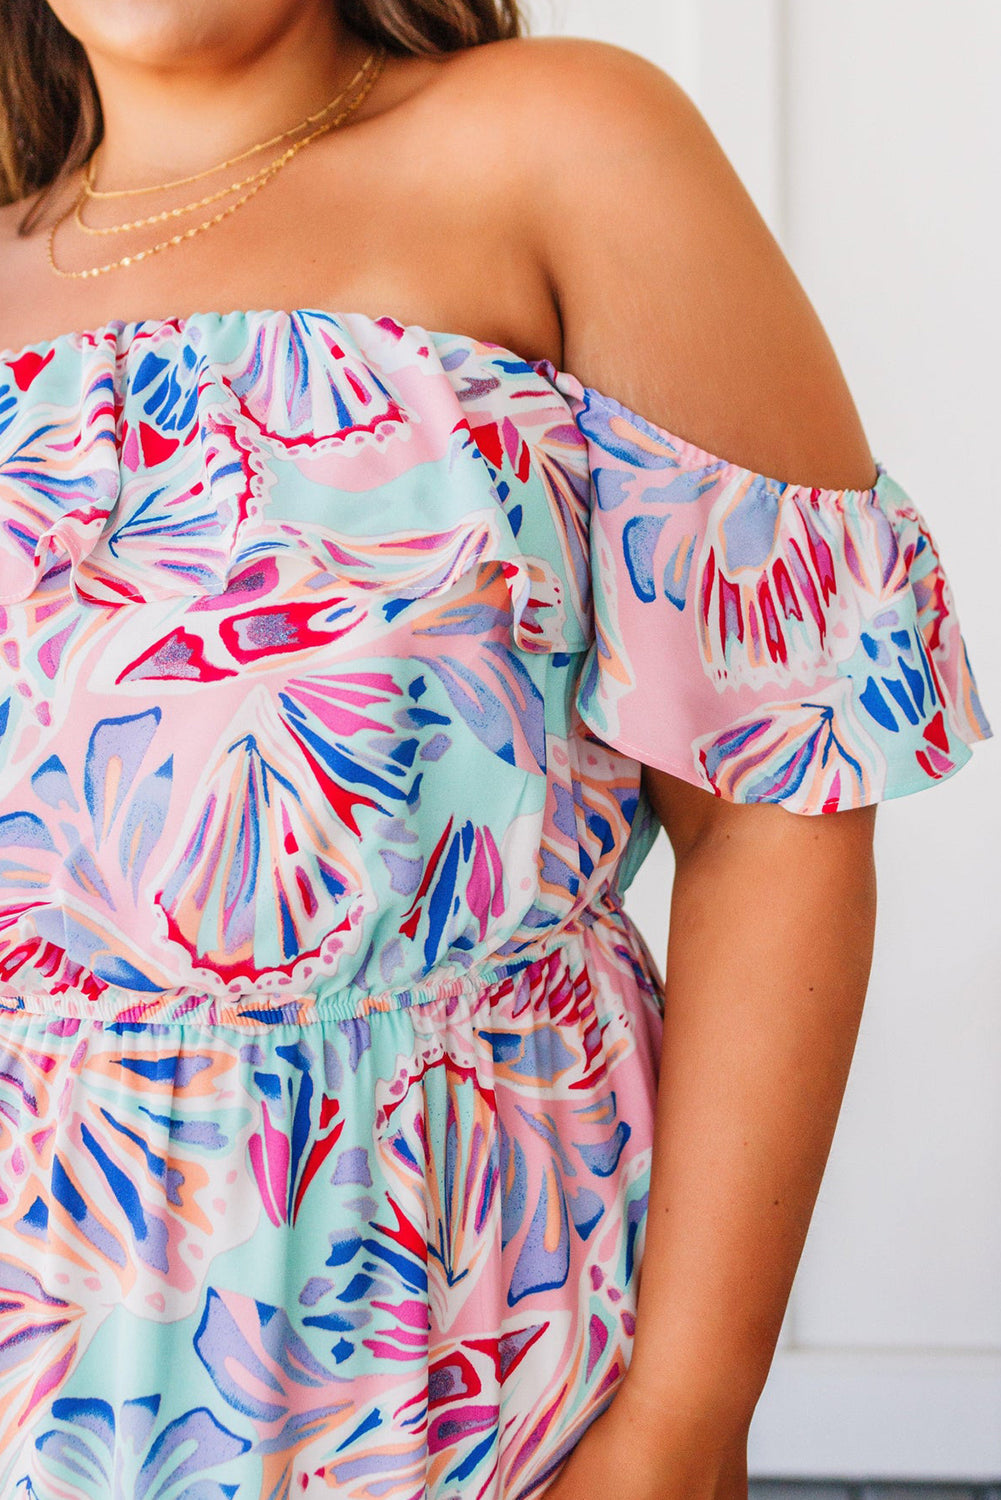 Pink Sea Shell Print Ruffled Sleeve Plus Size Maxi Dress - SELFTRITSS